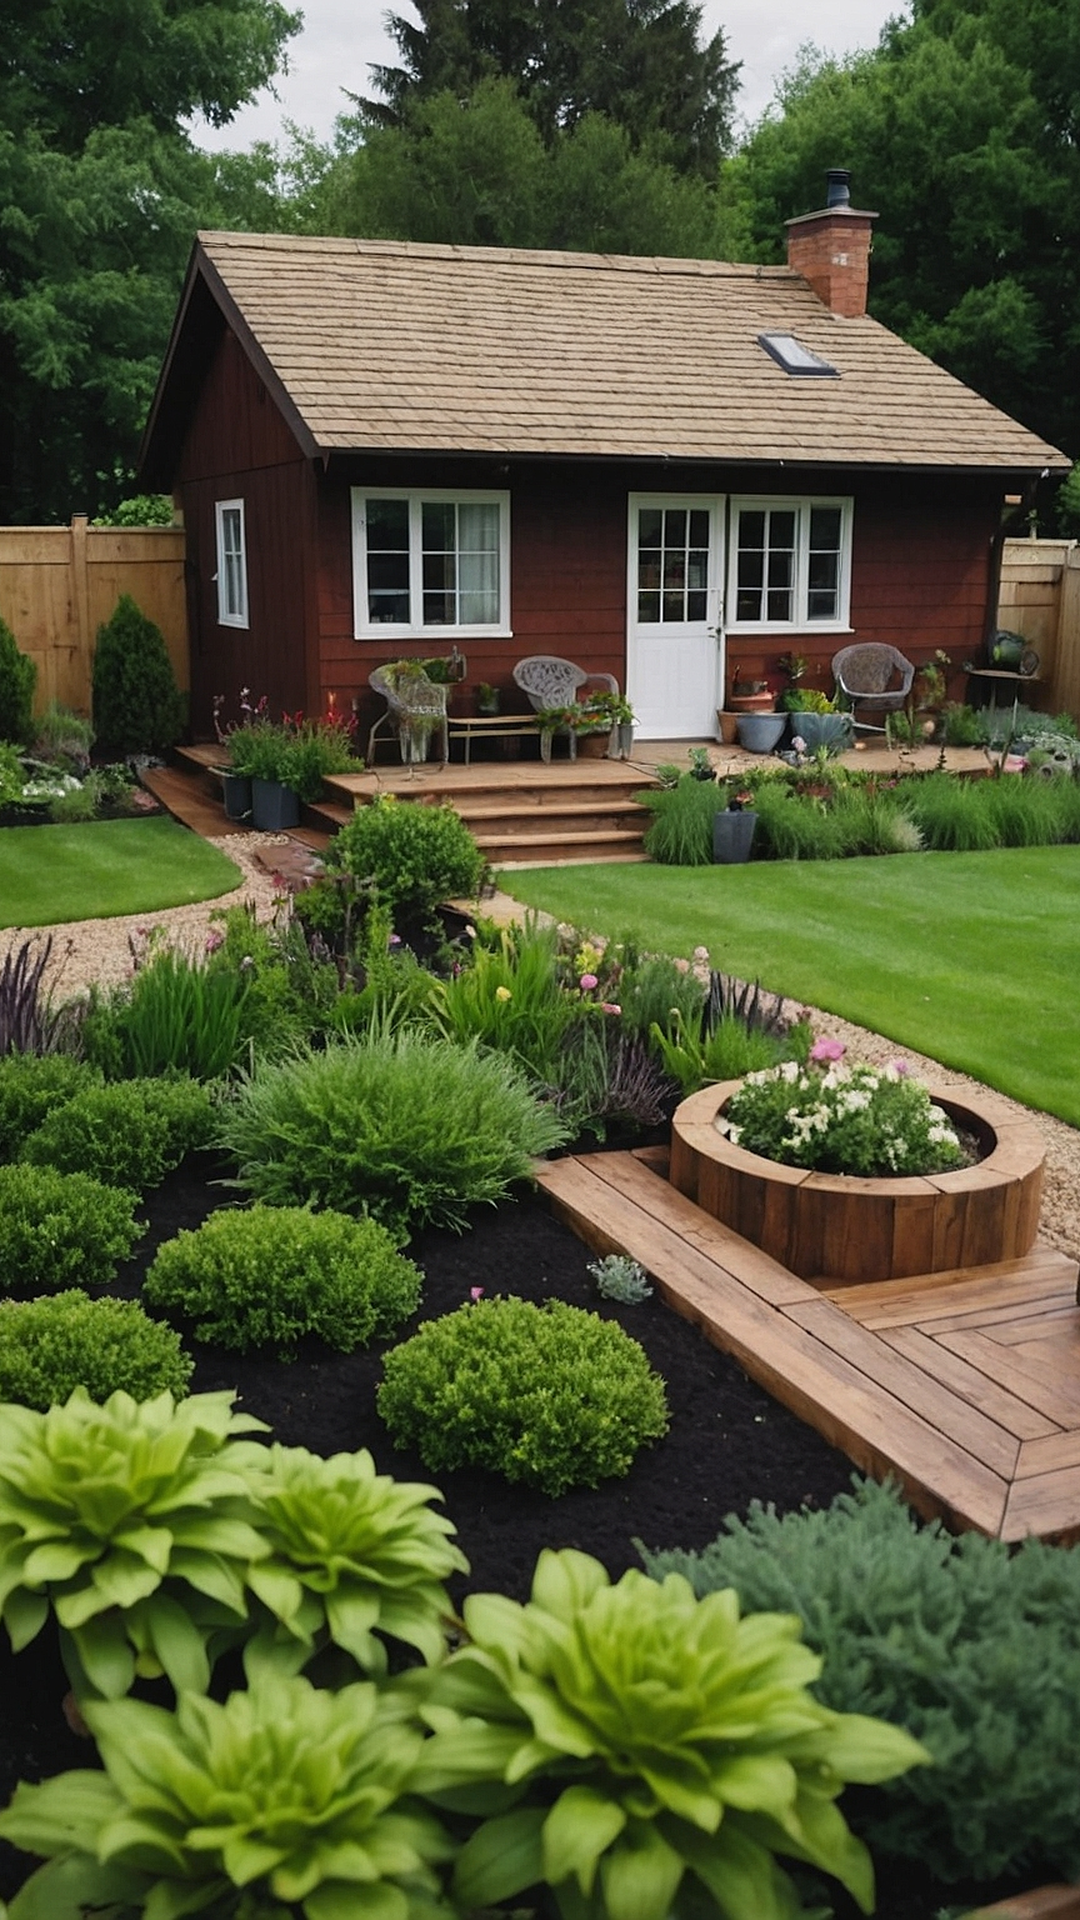 Flourishing Designs: Small Sized Garden Inspiration